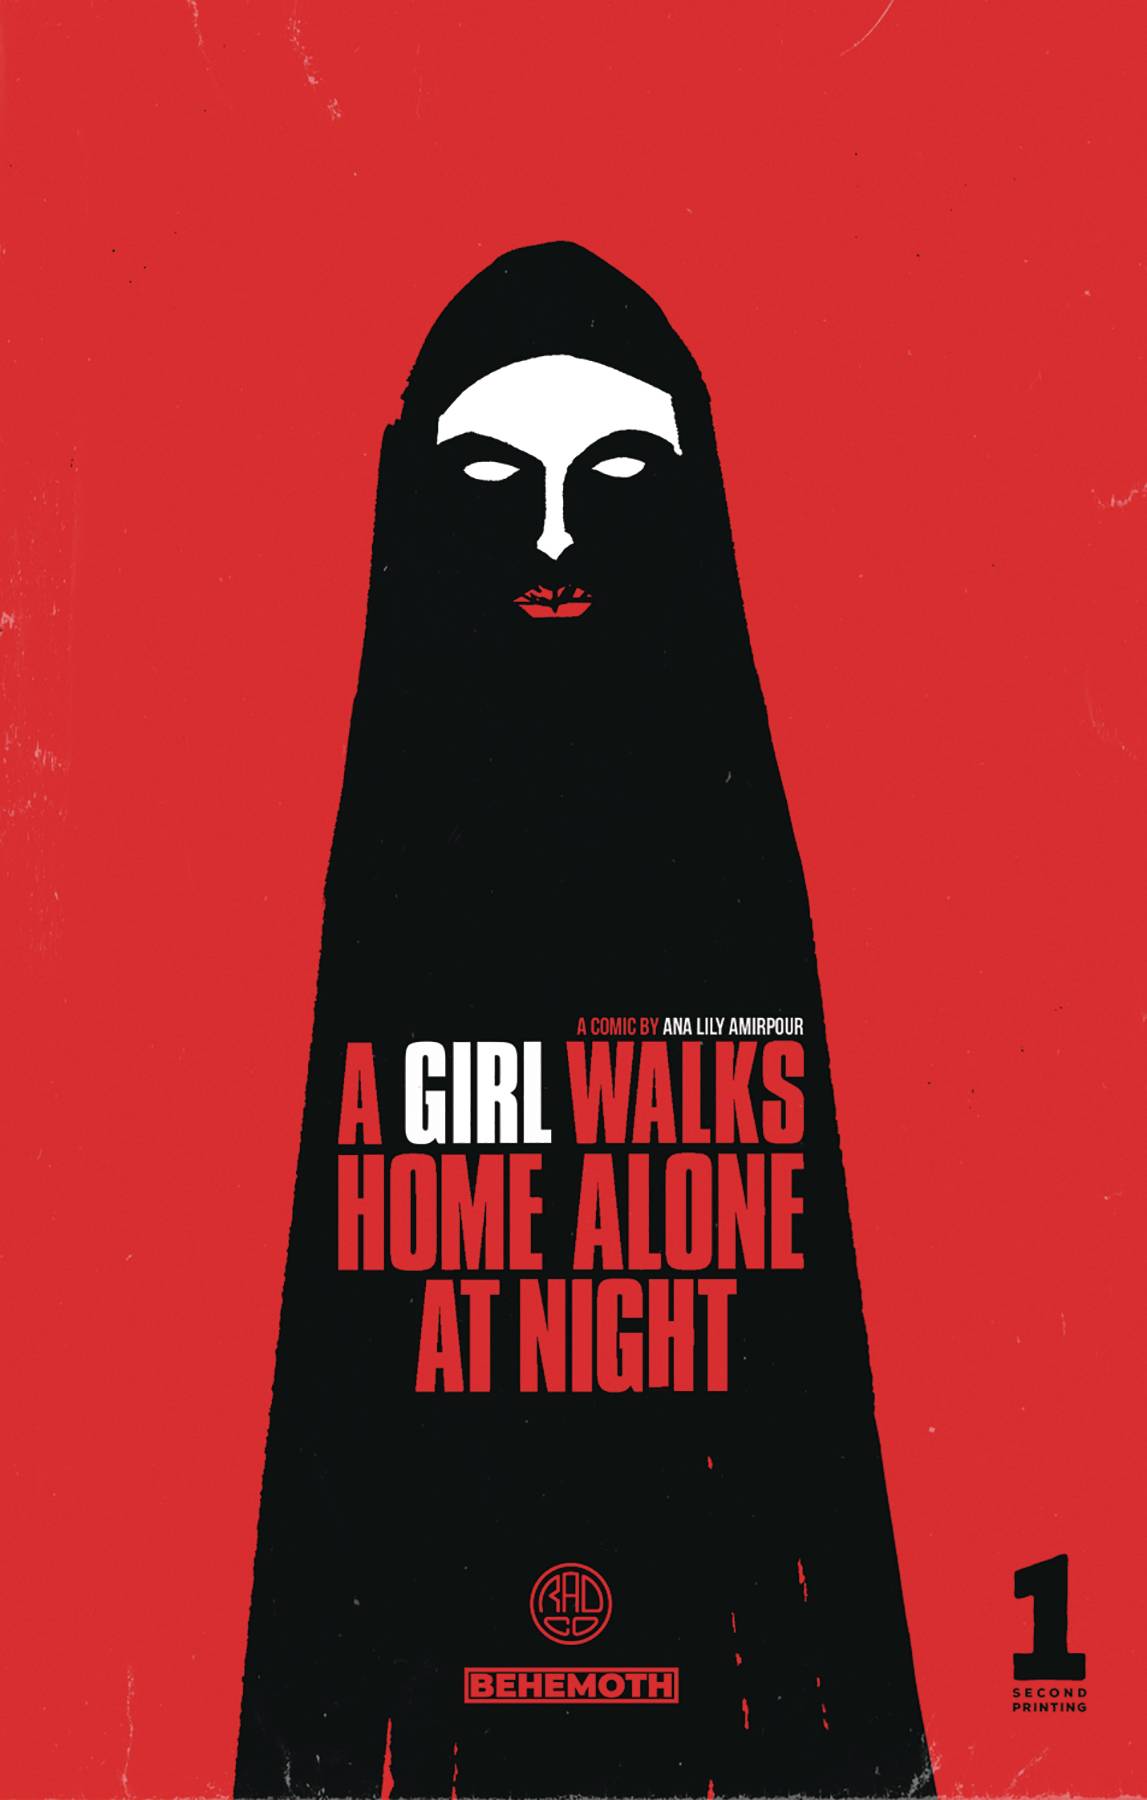 GIRL WALKS HOME ALONE AT NIGHT